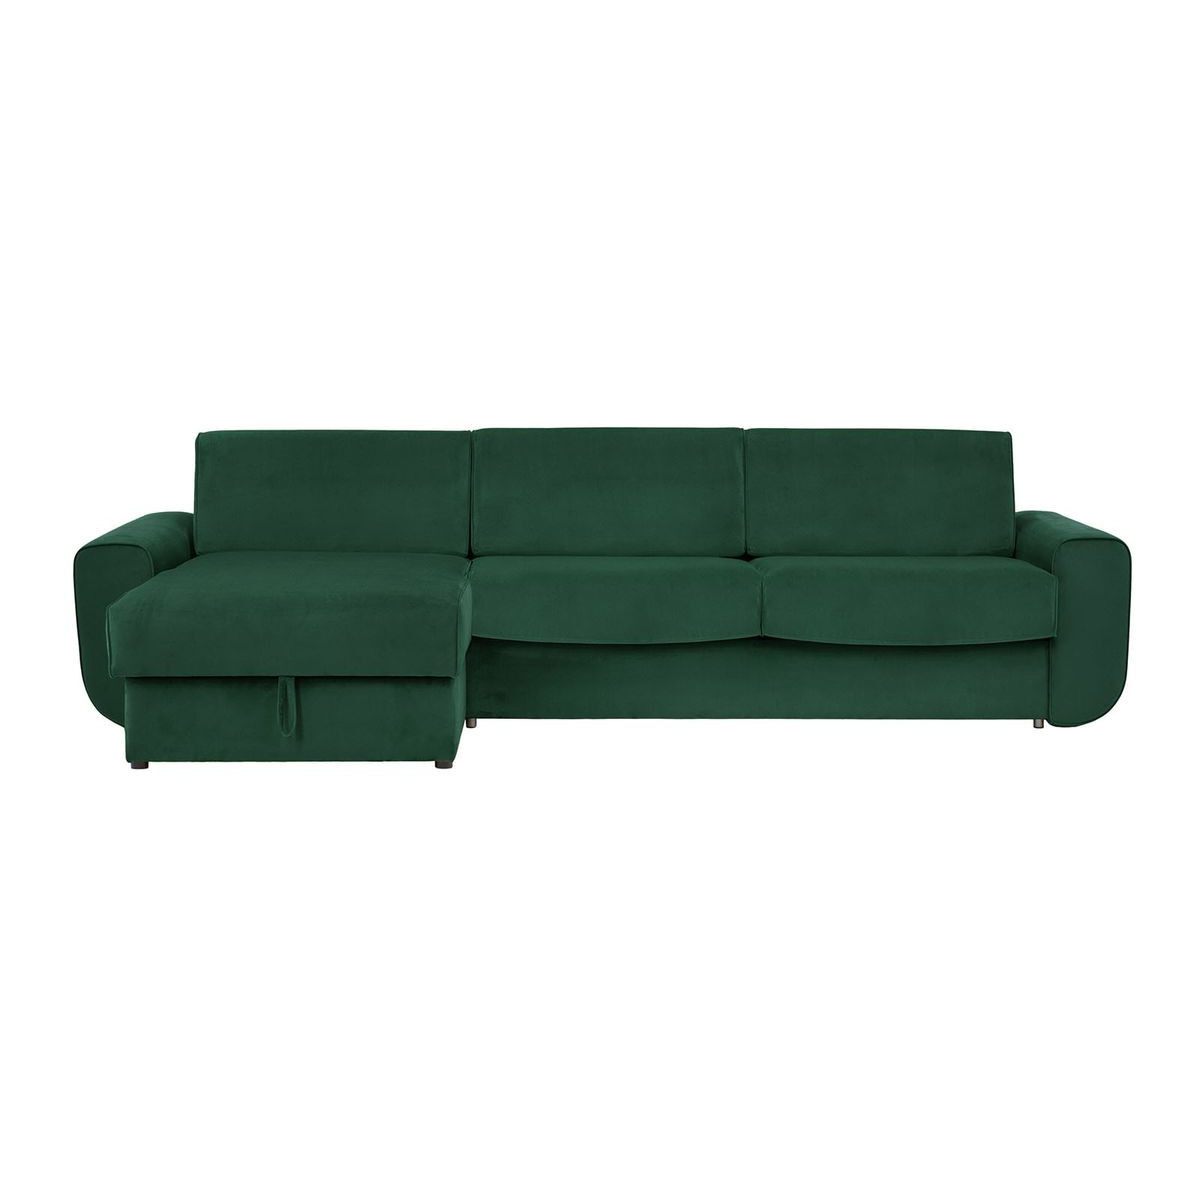 Salsa corner sofa bed with storage, dark green - image 1